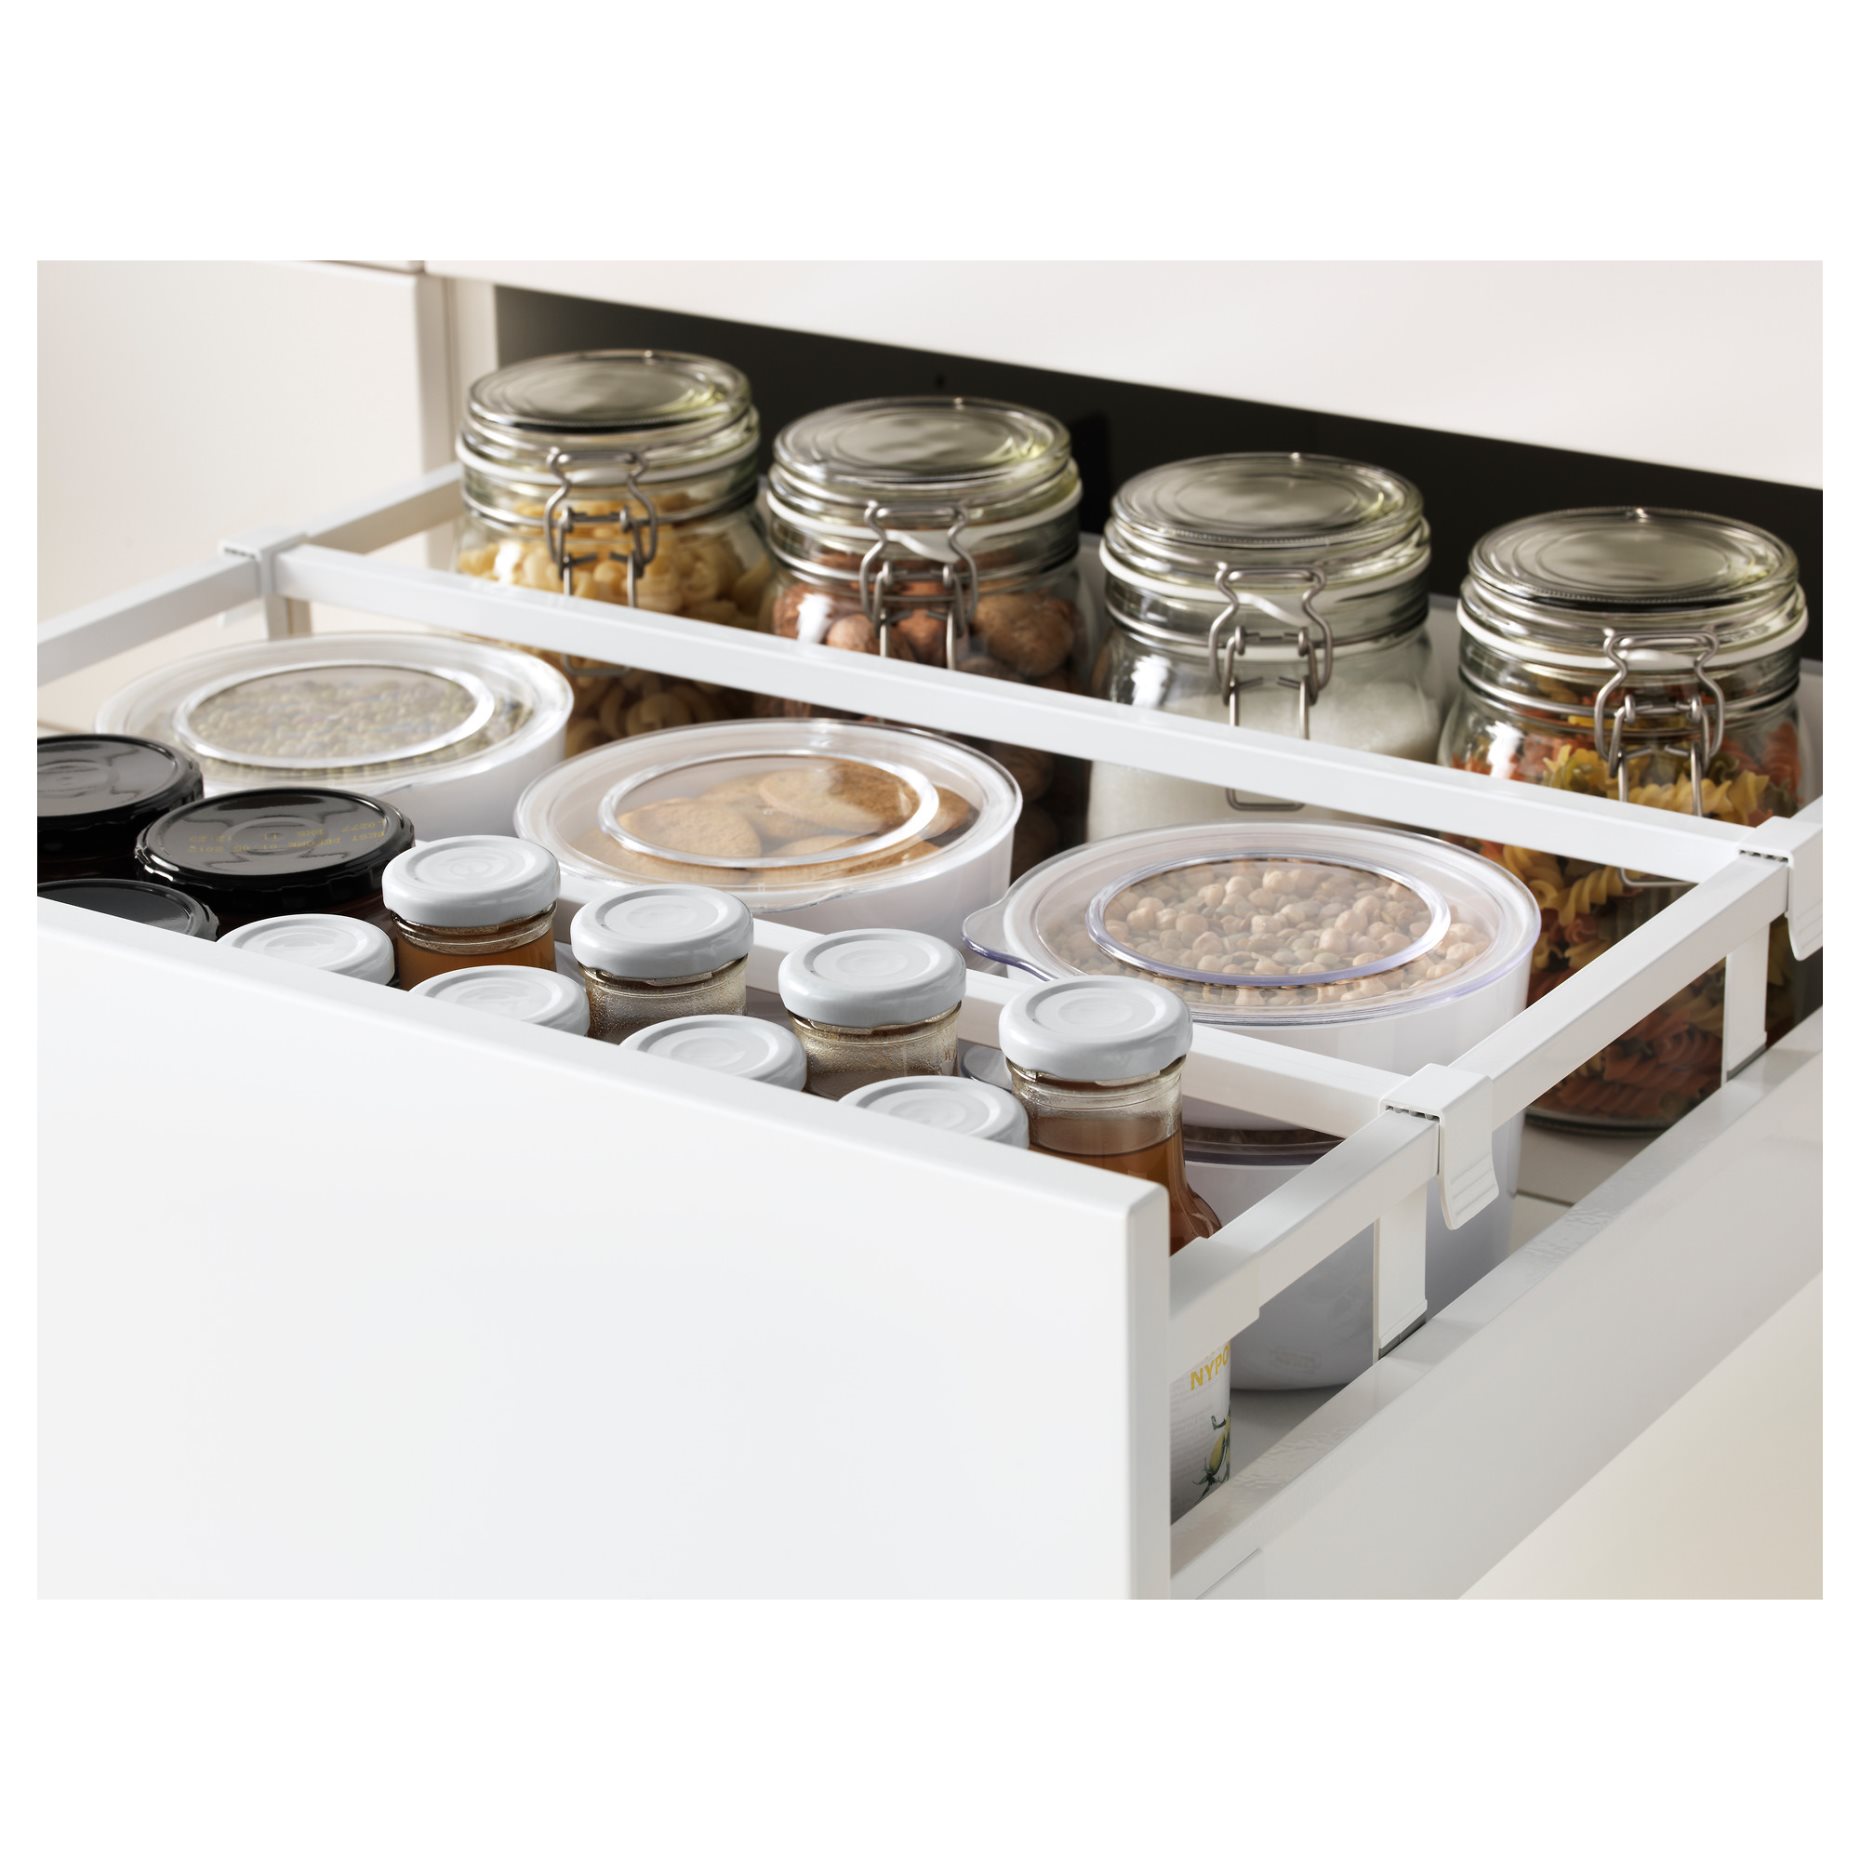 METOD/MAXIMERA, base cabinet 4 fronts/4 drawers, 692.162.10